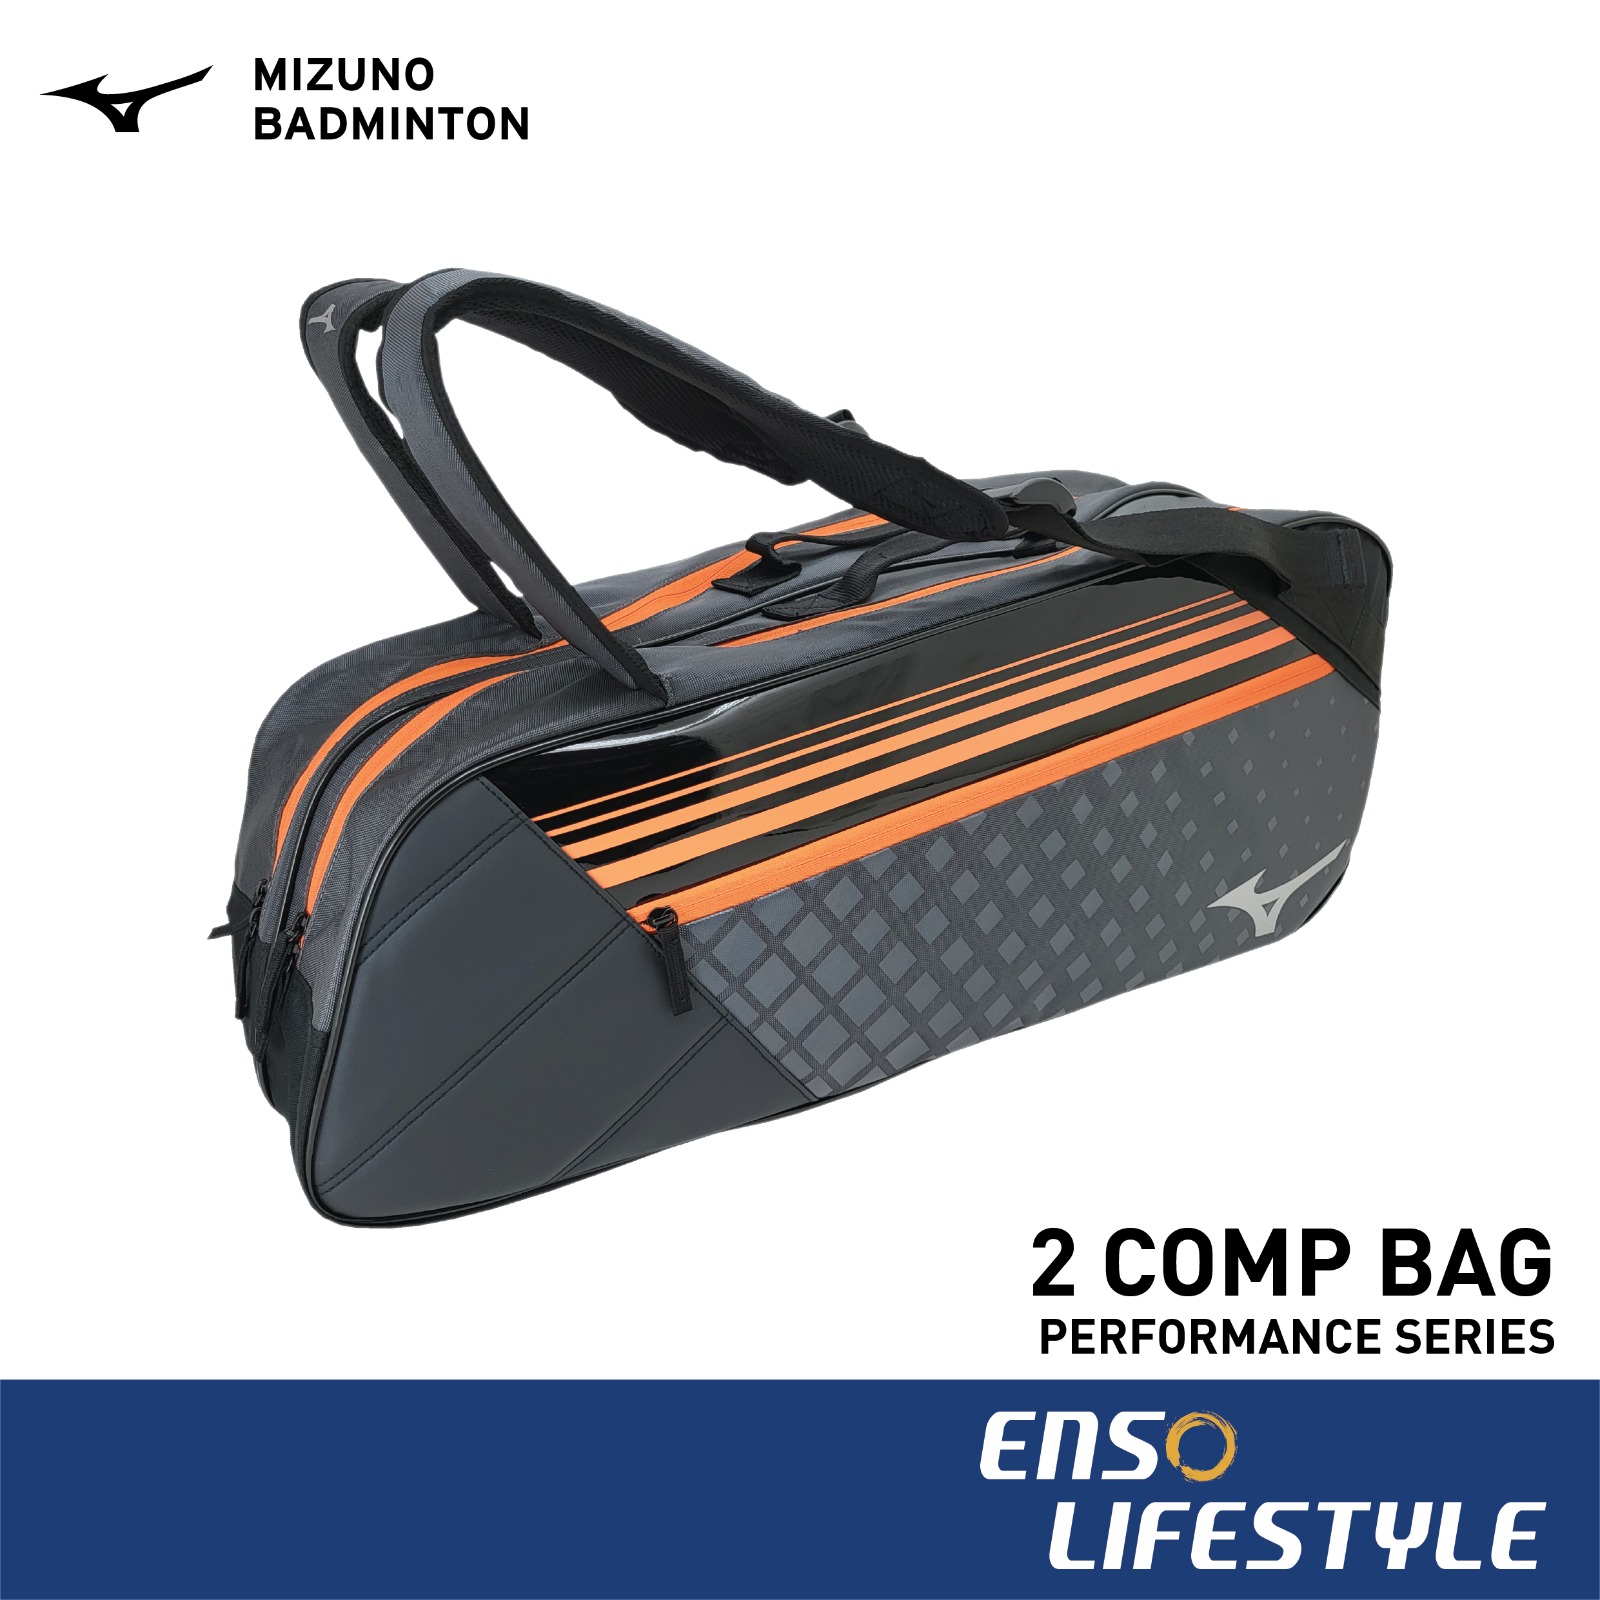 FLAMEER Sling Backpack Lightweight Racket Storage Bag for Women Men Tennis Badminton